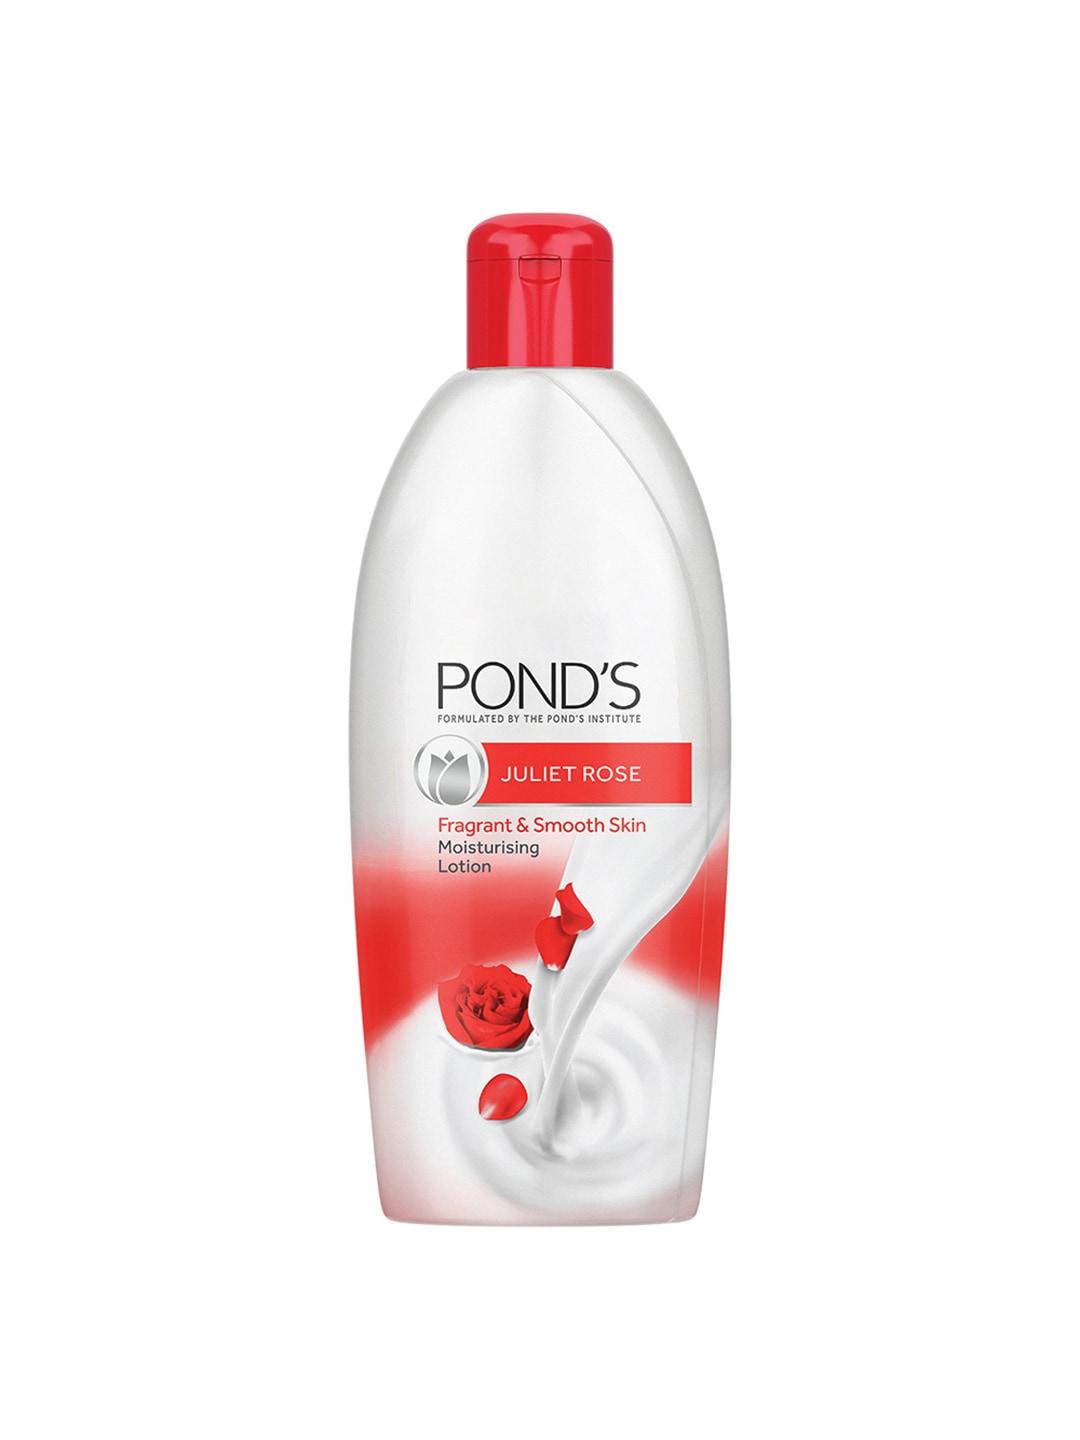 ponds-juliet-rose-moisturising-body-lotion-for-fragrant-&-smooth-skin---100ml